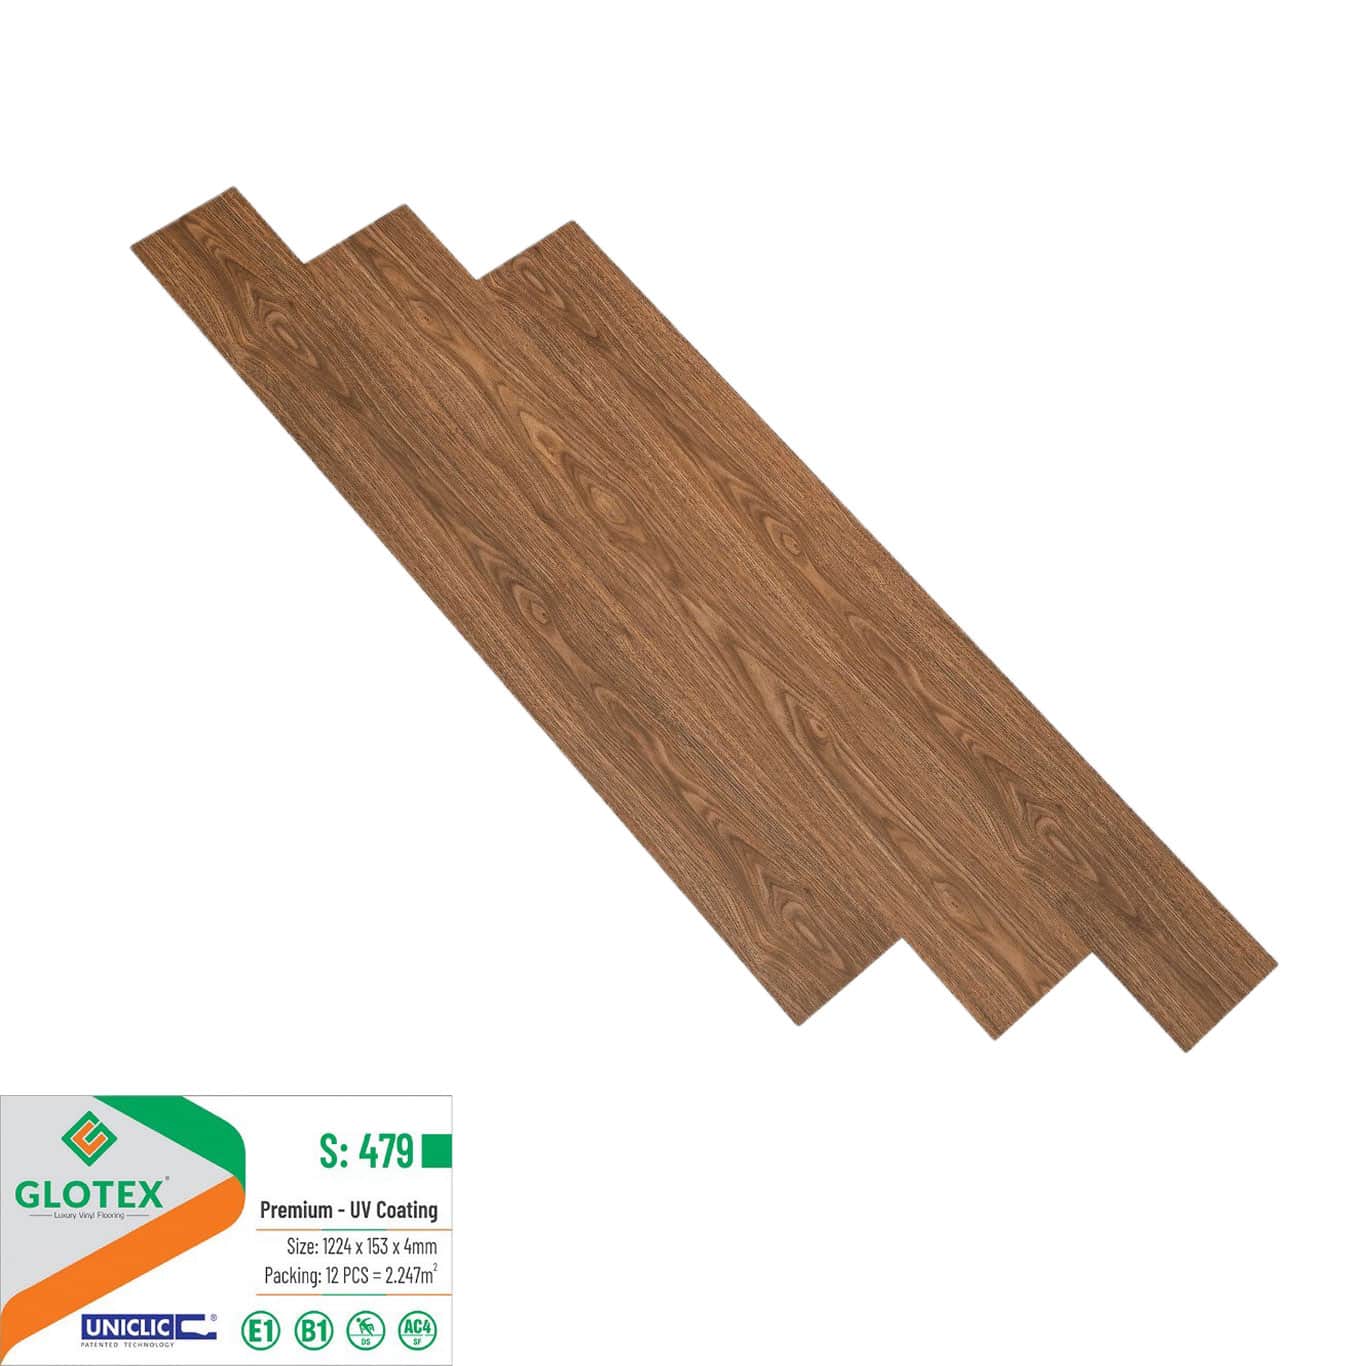 Sàn nhựa giả gỗ Glotex S479